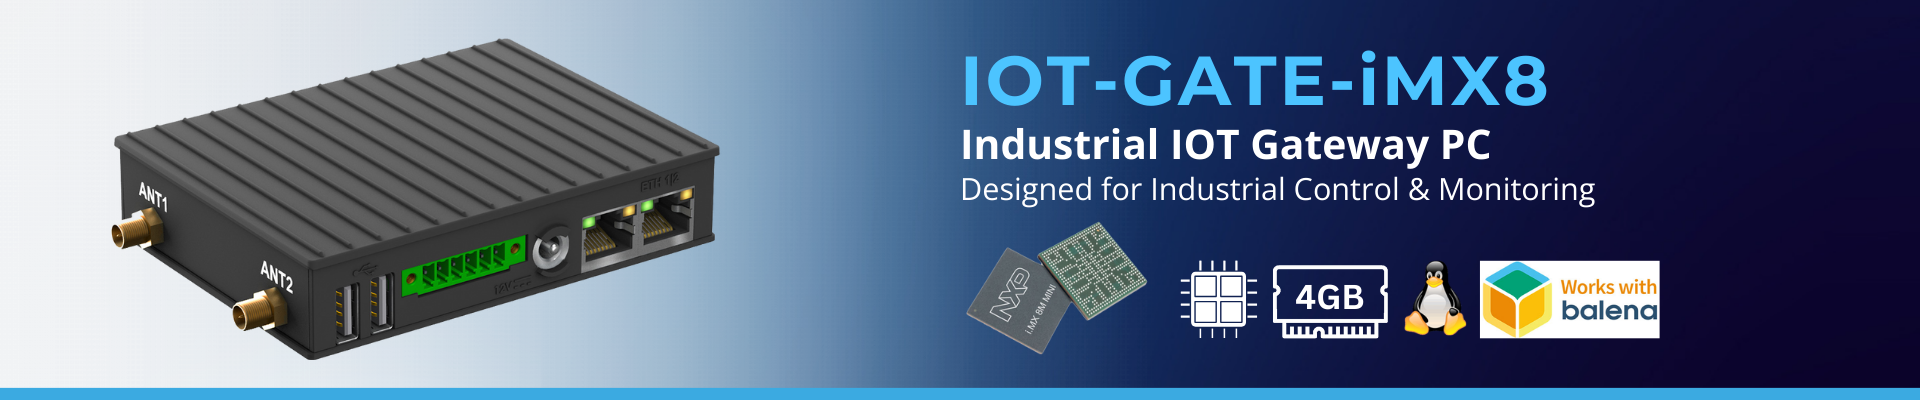 IOT-GATE-iMX8: Industrial IoT Gateway PC